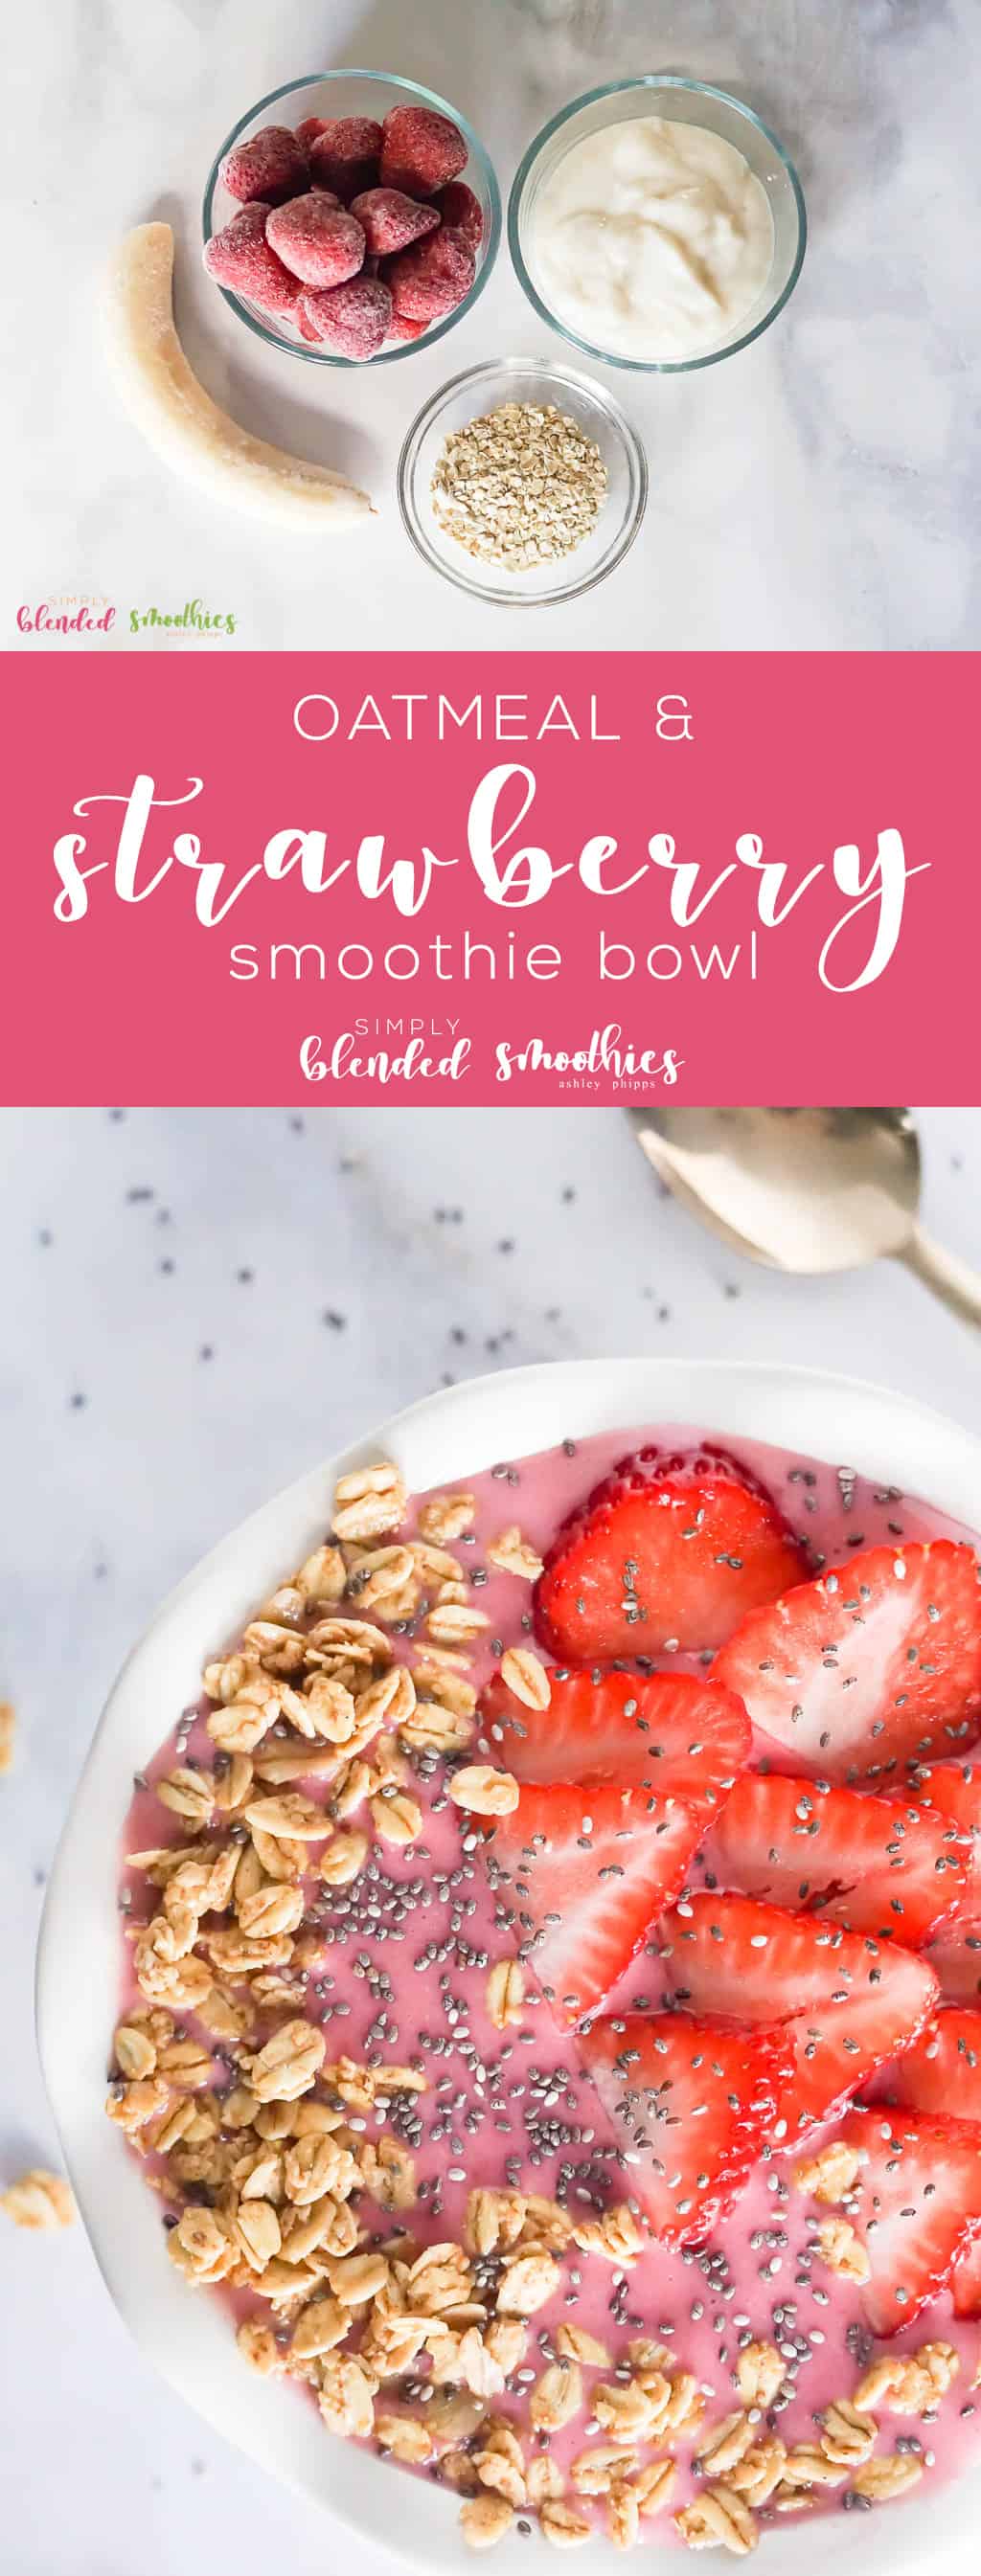 Strawberry Oatmeal Smoothie Bowl - A Delicious Smoothie Bowl Recipe